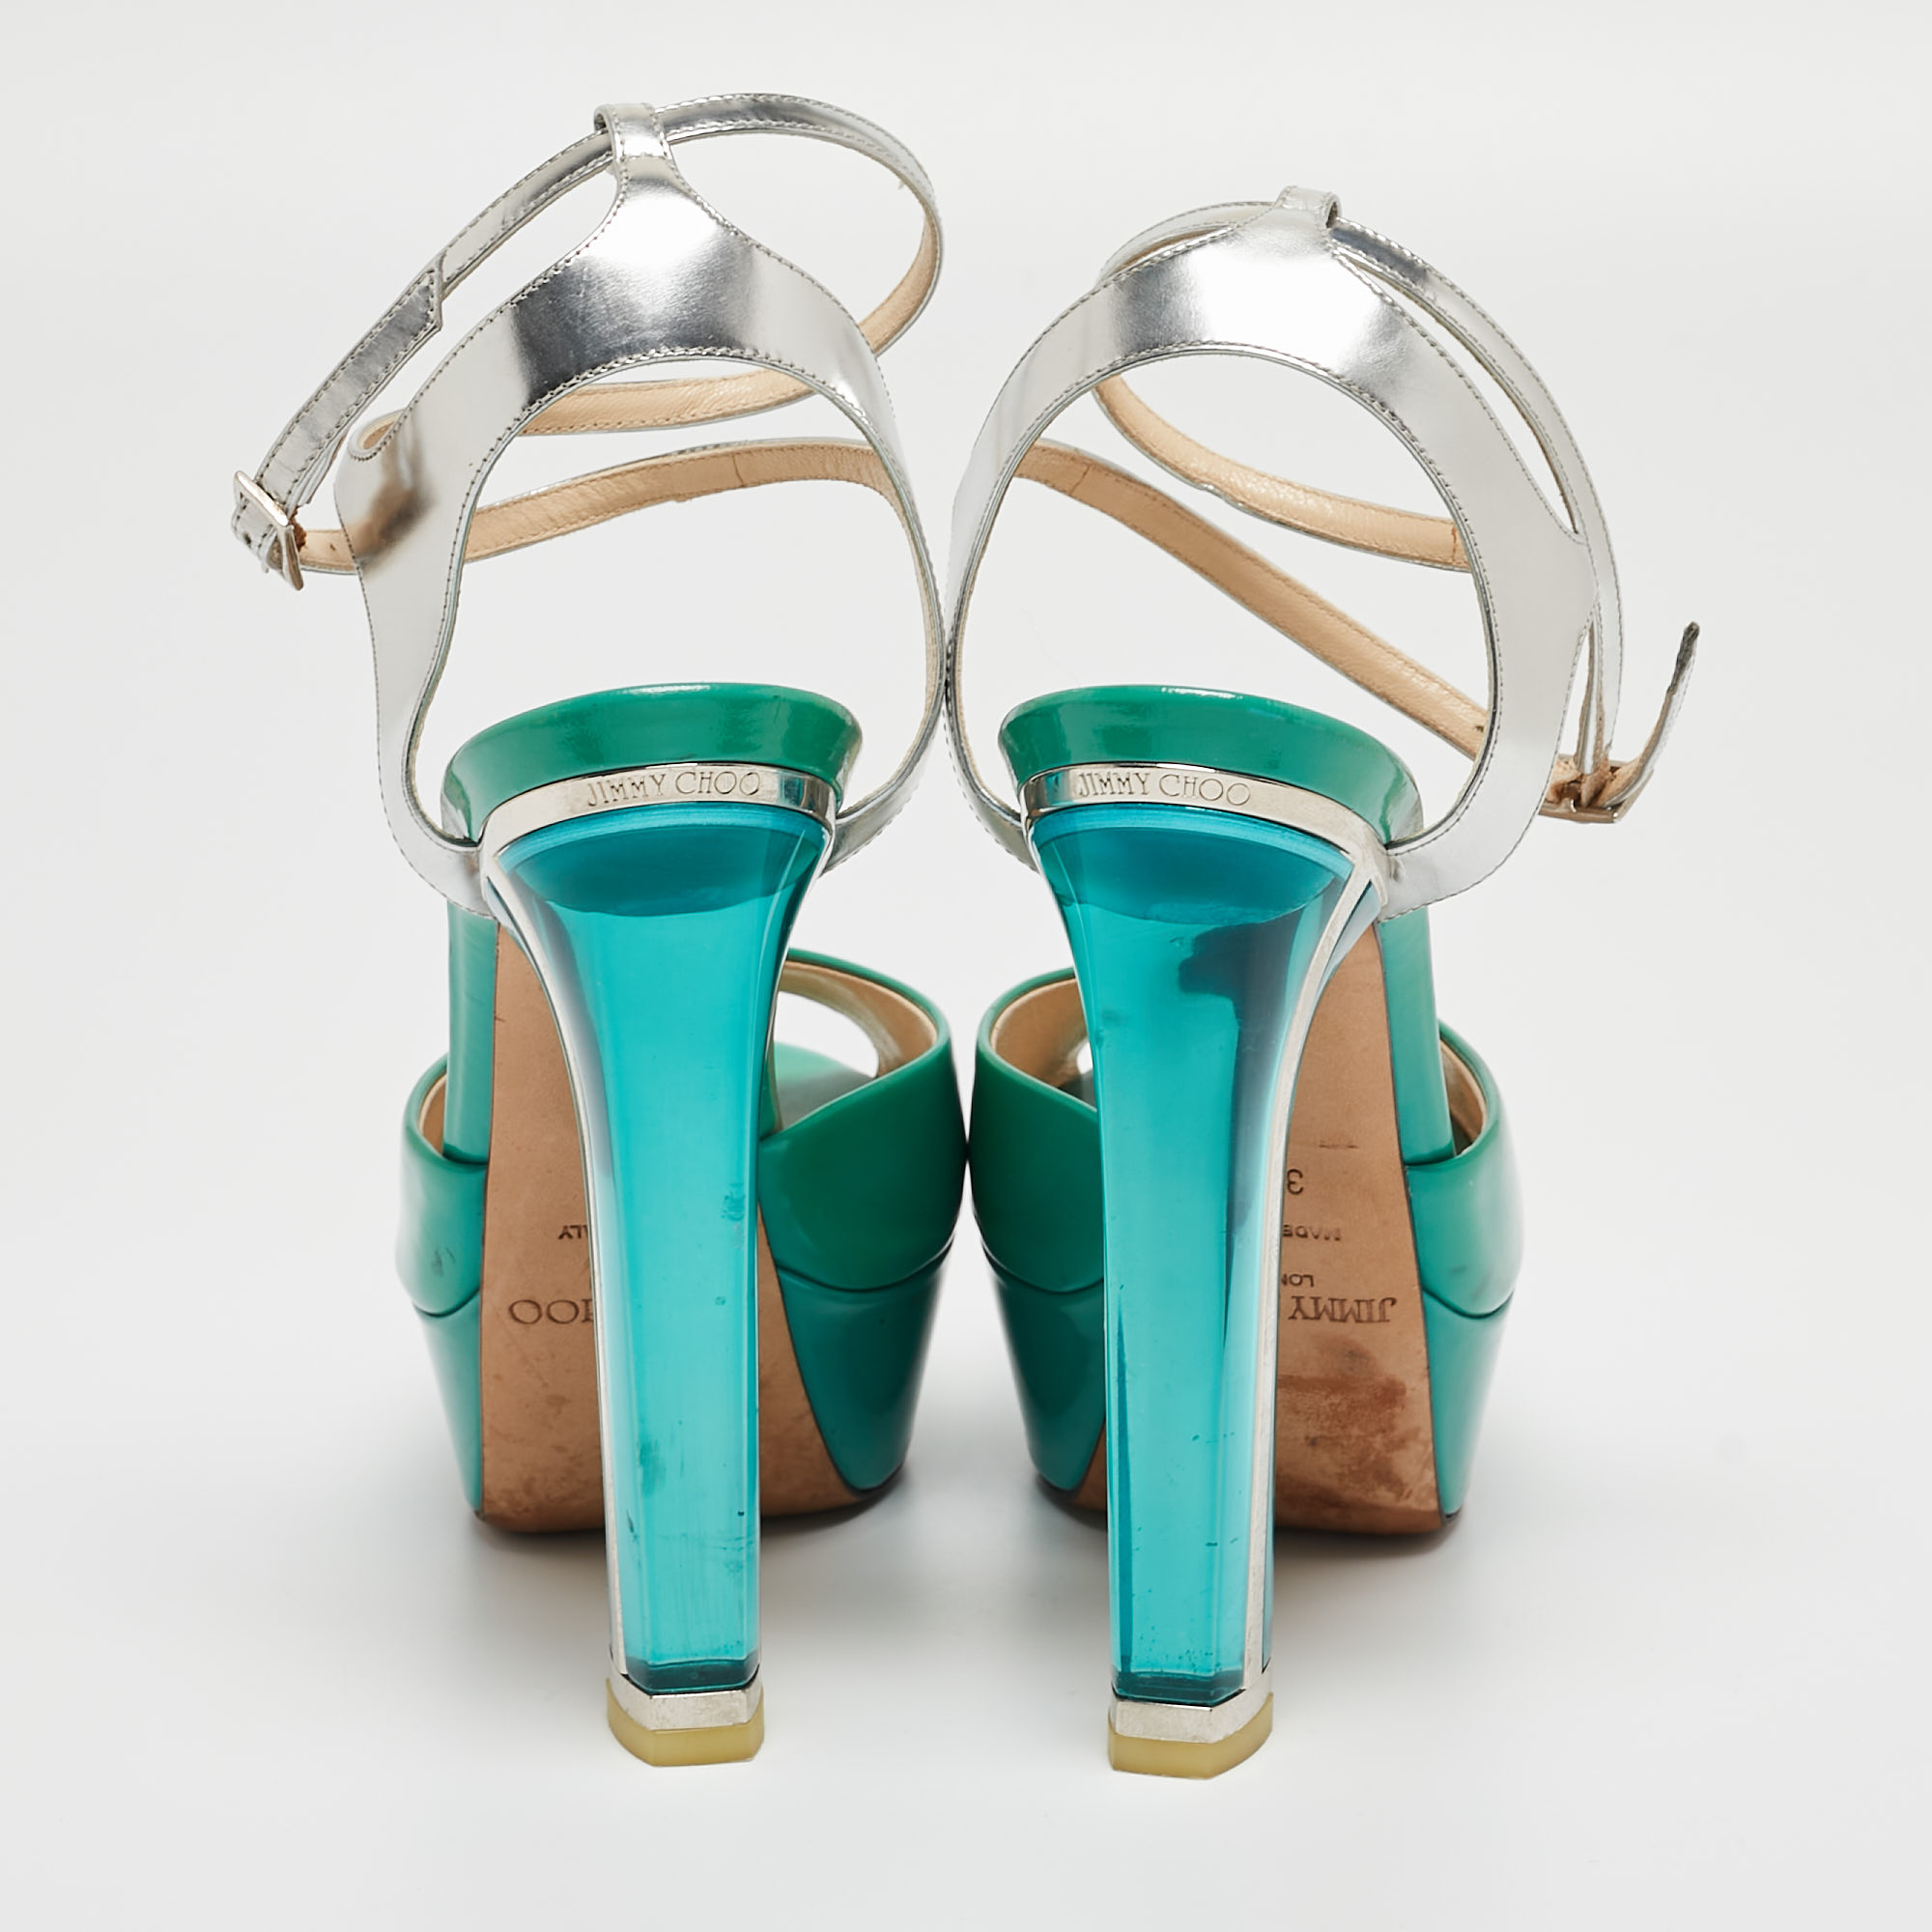 Jimmy Choo Green/Silver Leather Lolita Platform Sandals Size 38.5